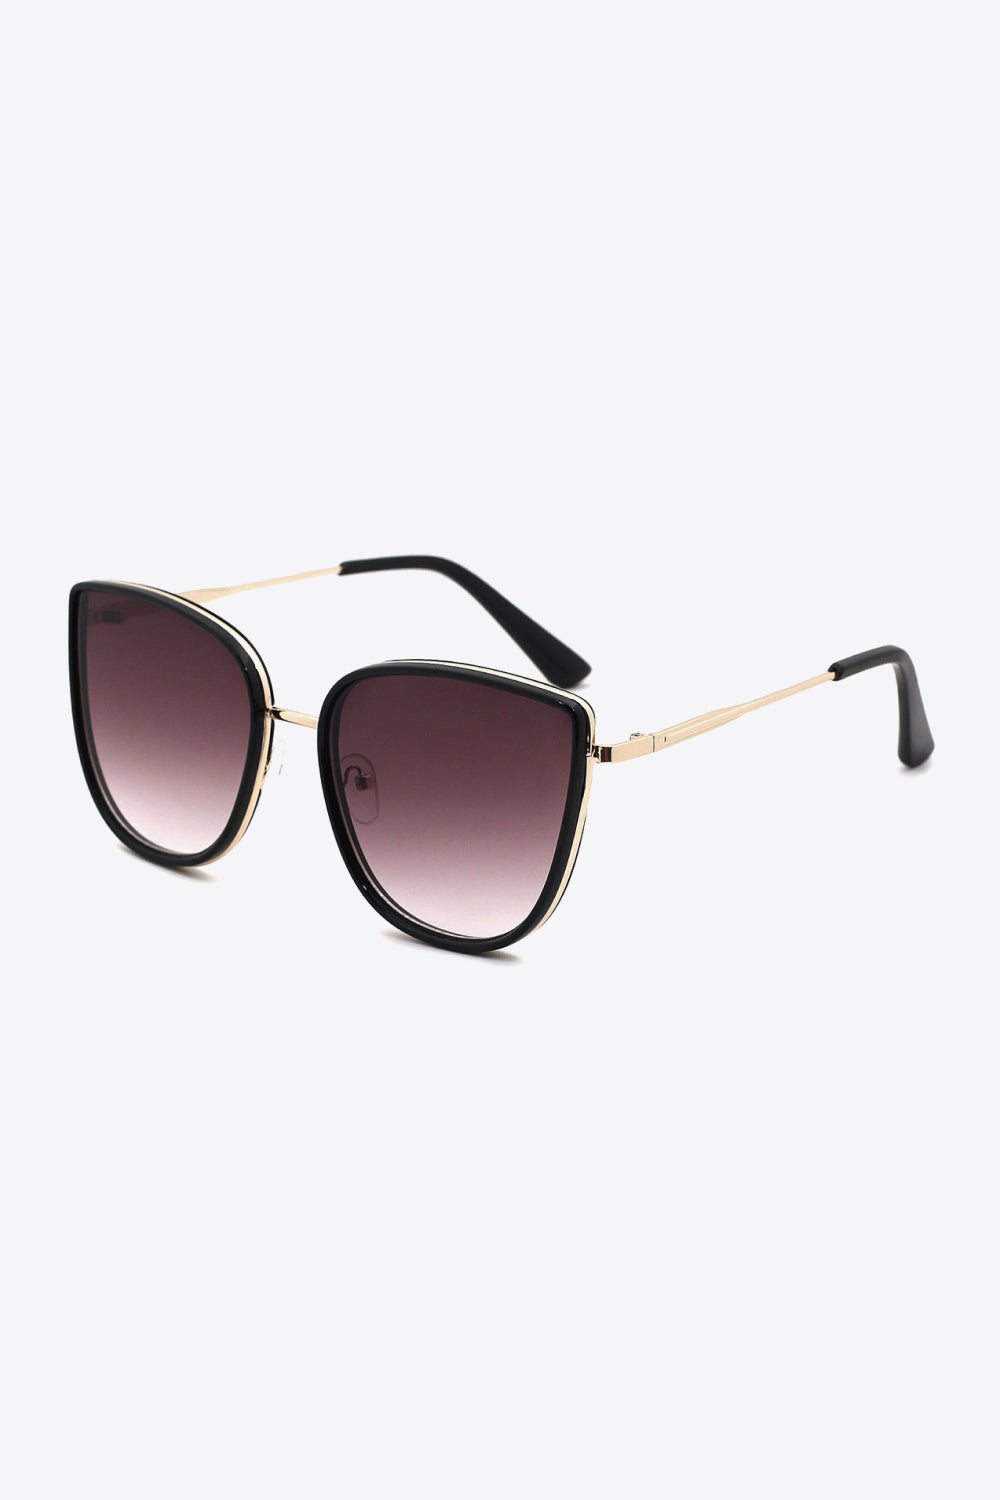 Full Rim Metal-Plastic Hybrid Frame Sunglasses - The Fashion Unicorn